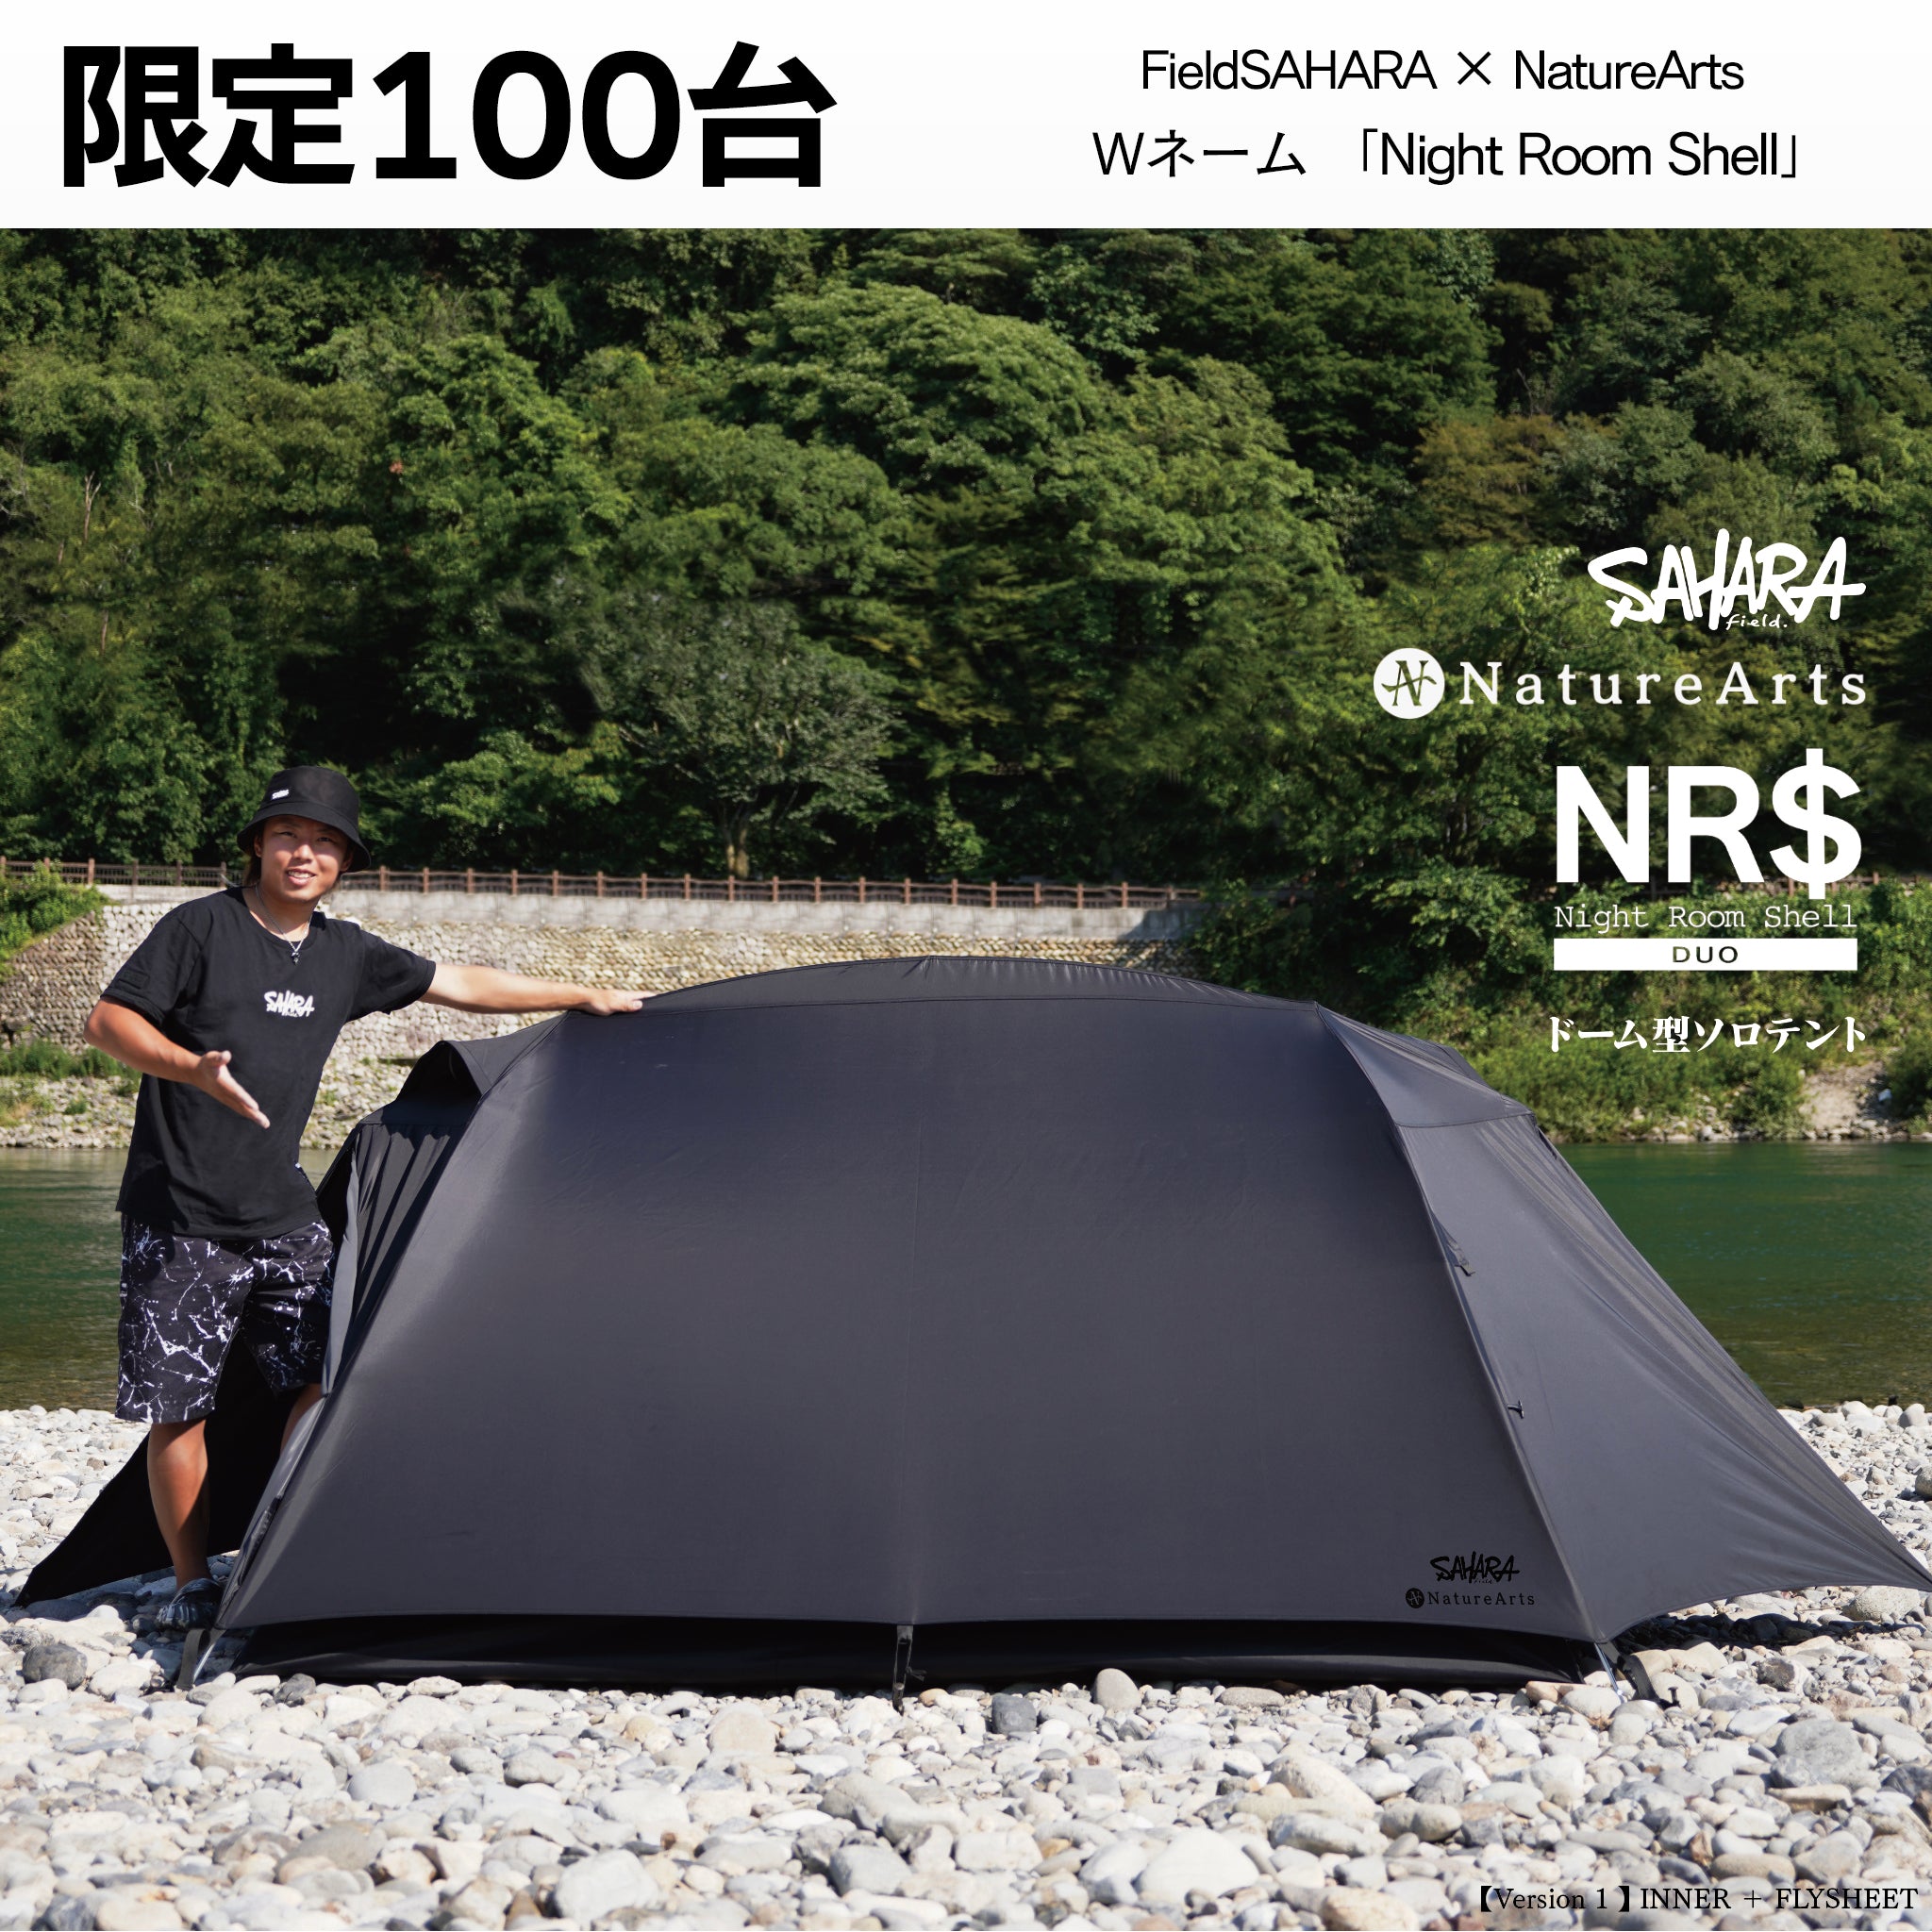 FieldSAHARA × NatureArts Night Room Shell Duoドーム型ソロテント 限定100台 受注販売